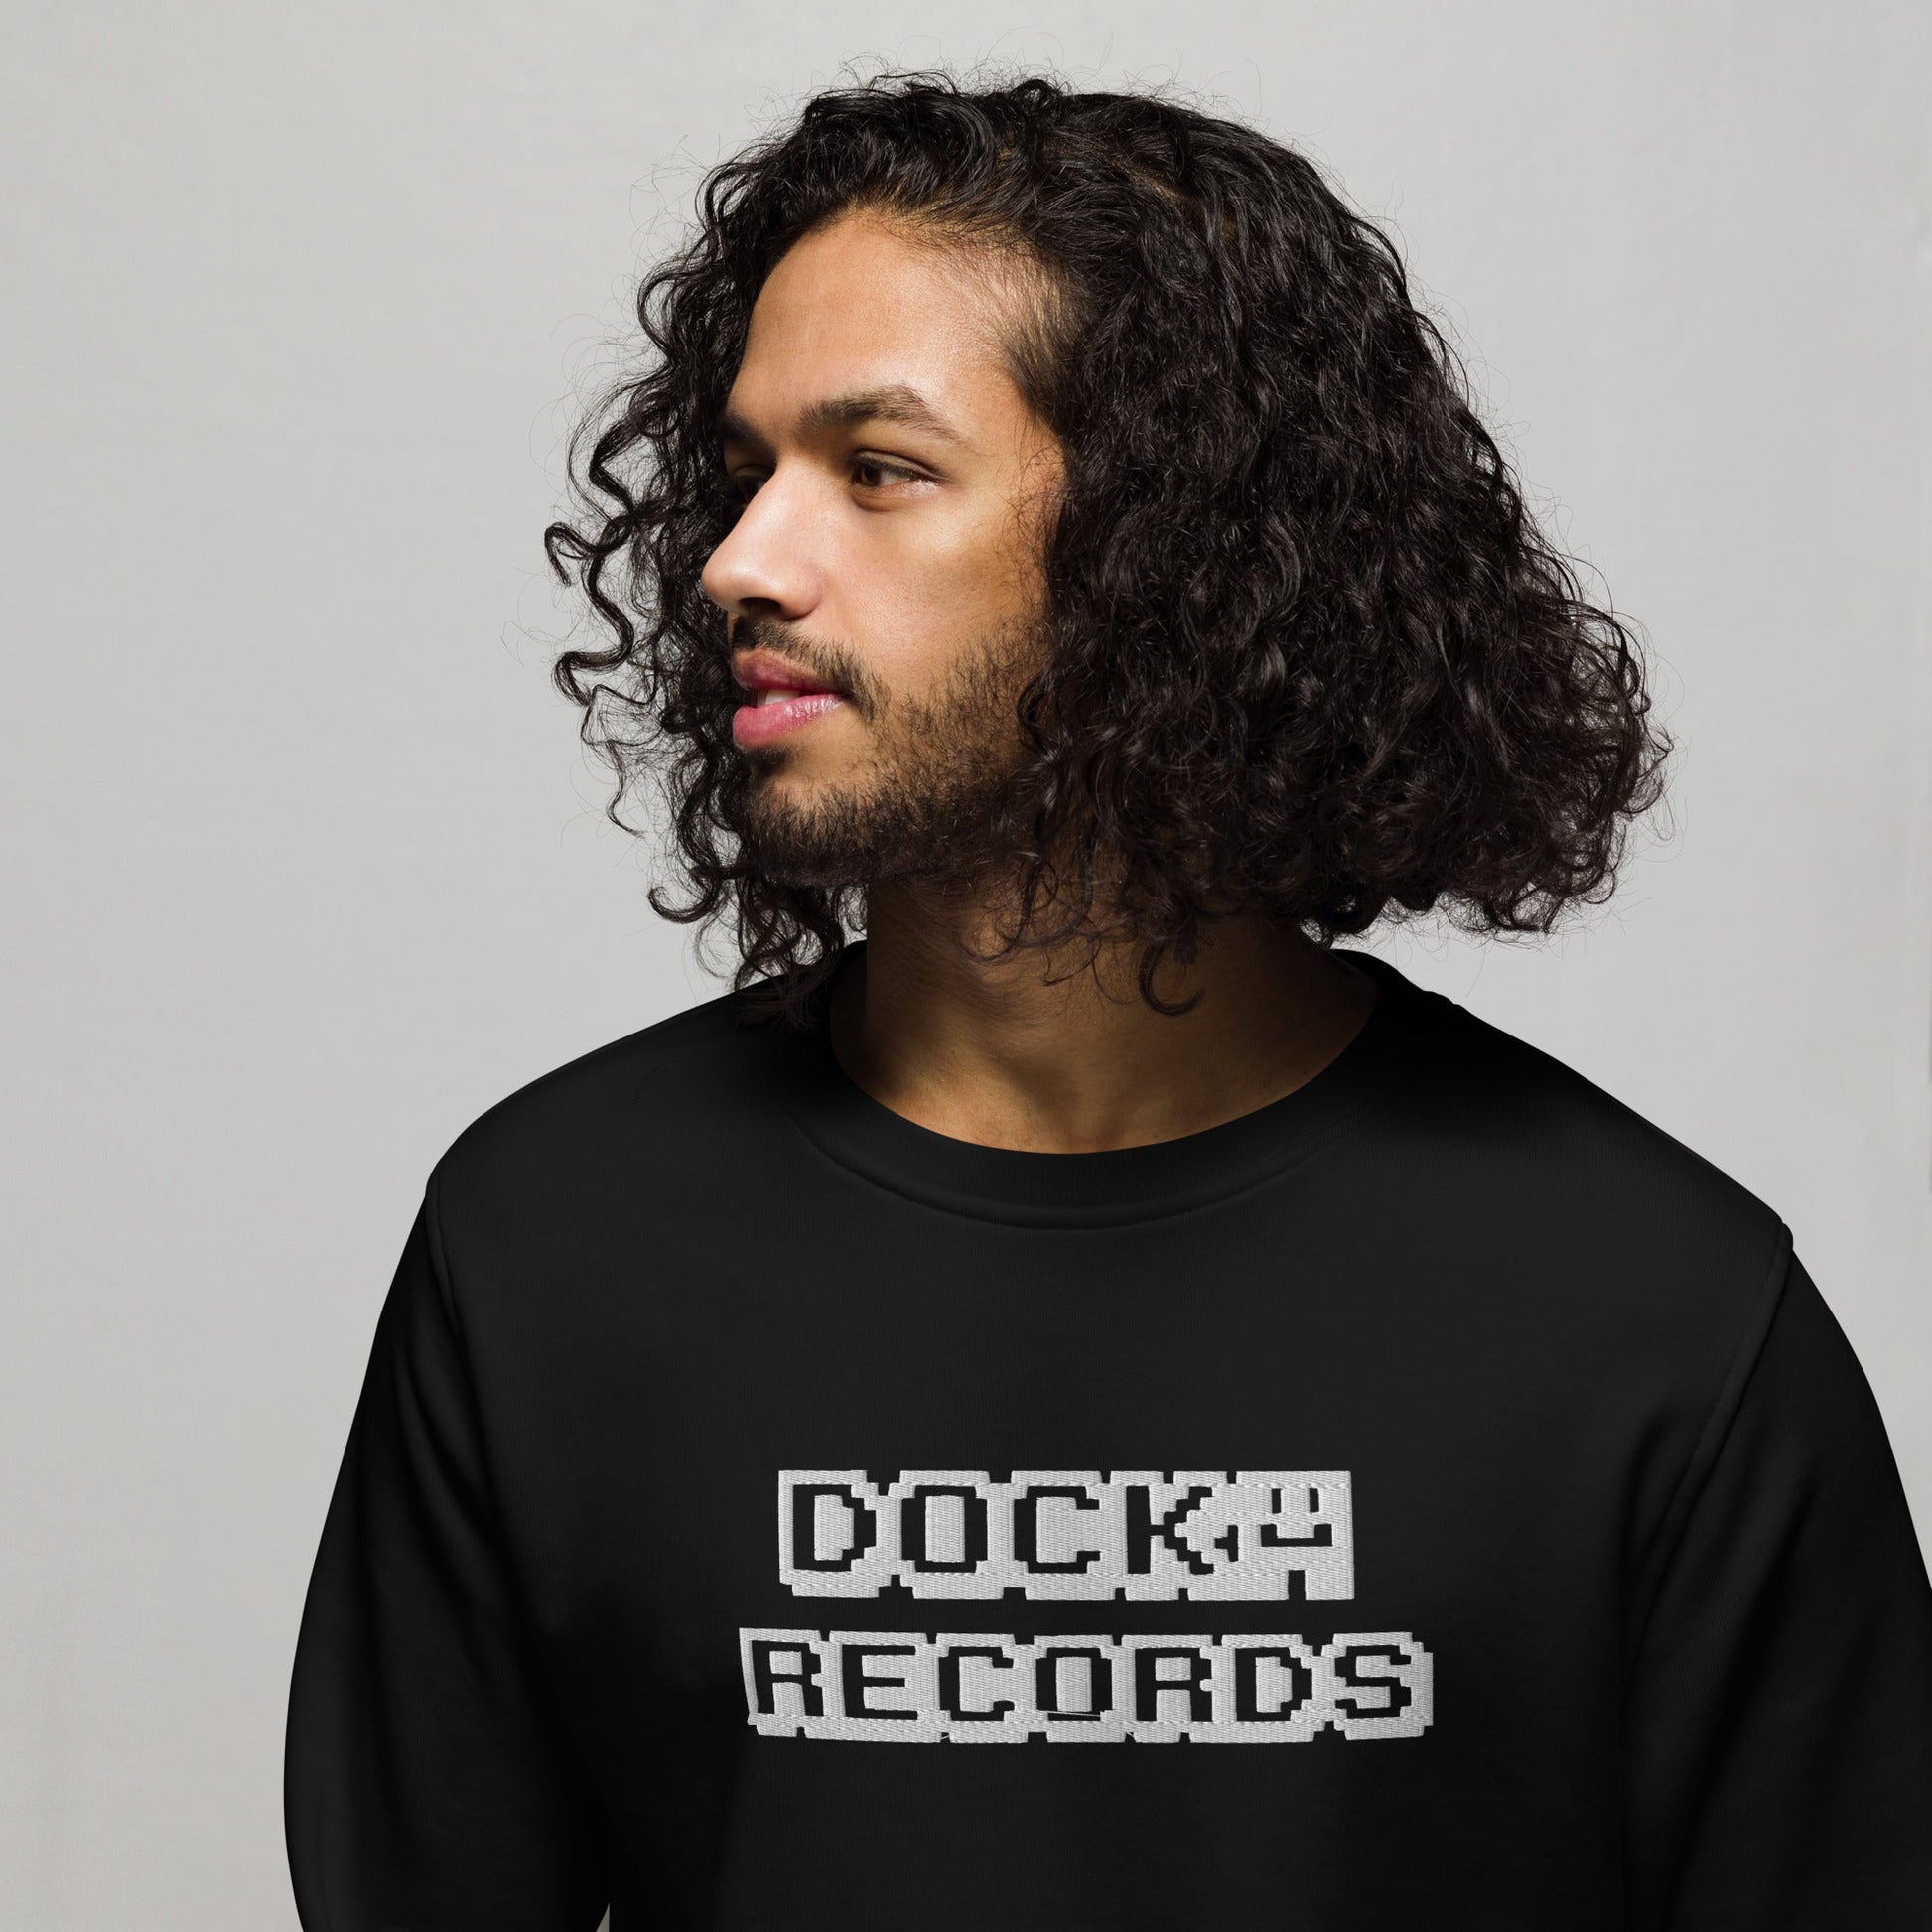 Docka Records Unisex Organic Sweatshirt - BeExtra! Apparel & More